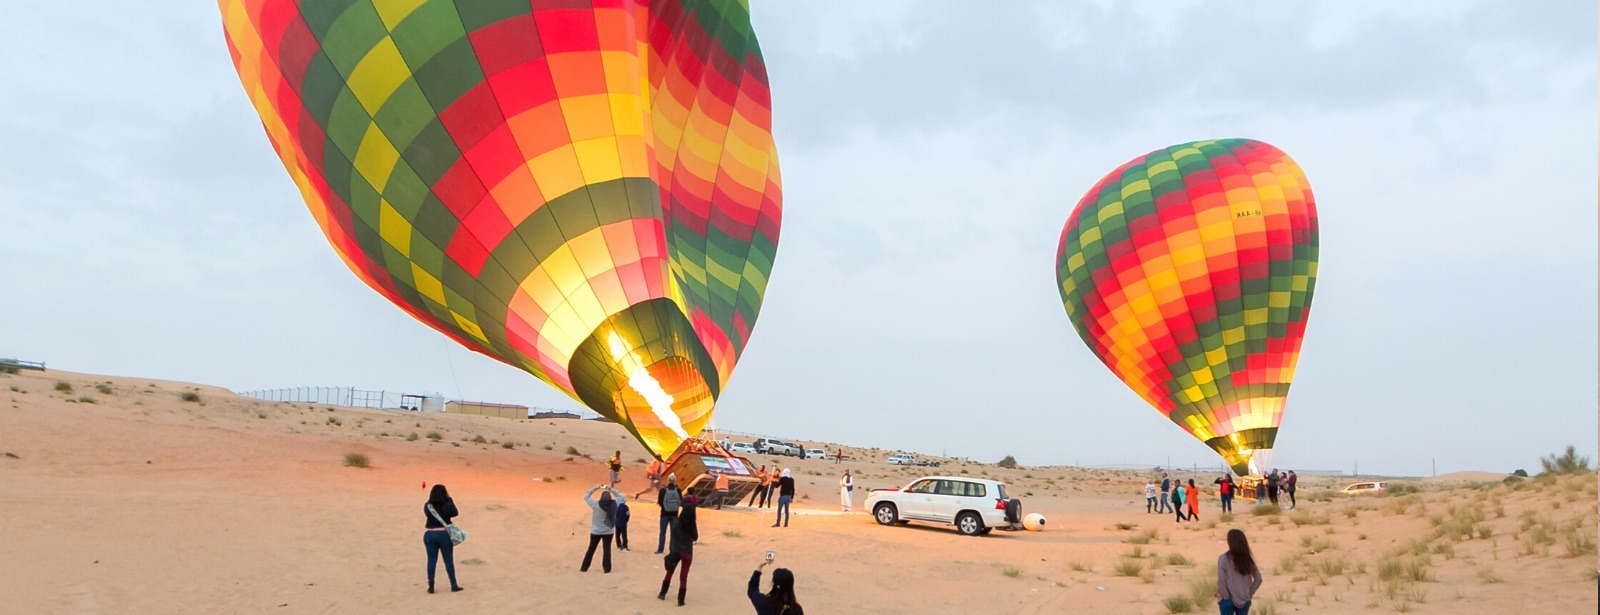 Sunrise Hot Air Balloon Experience in Dubai - Coming Soon in UAE